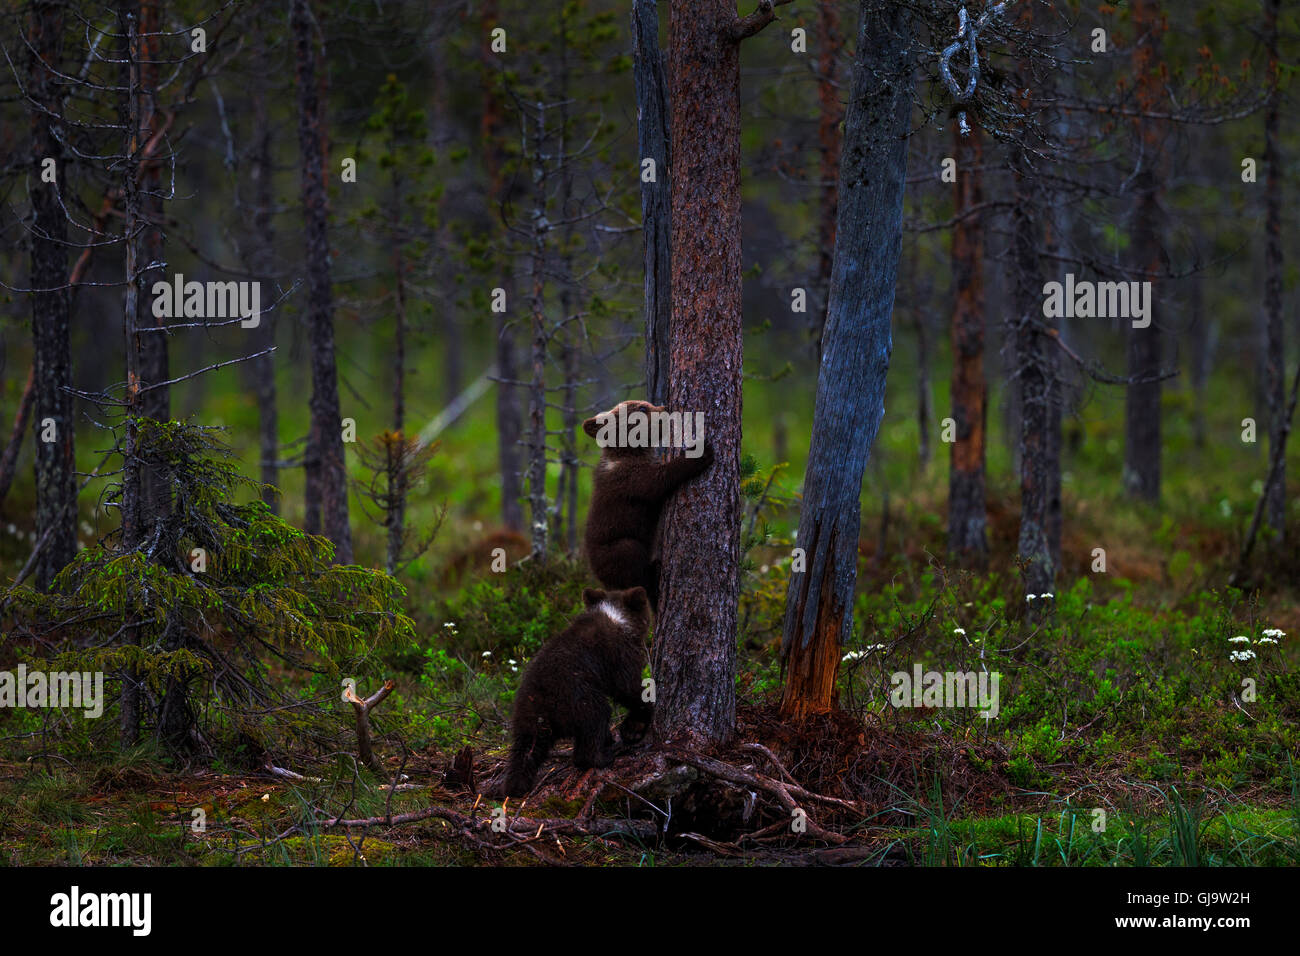 Brown bear cubs climbing a tree, Finland. Stock Photo